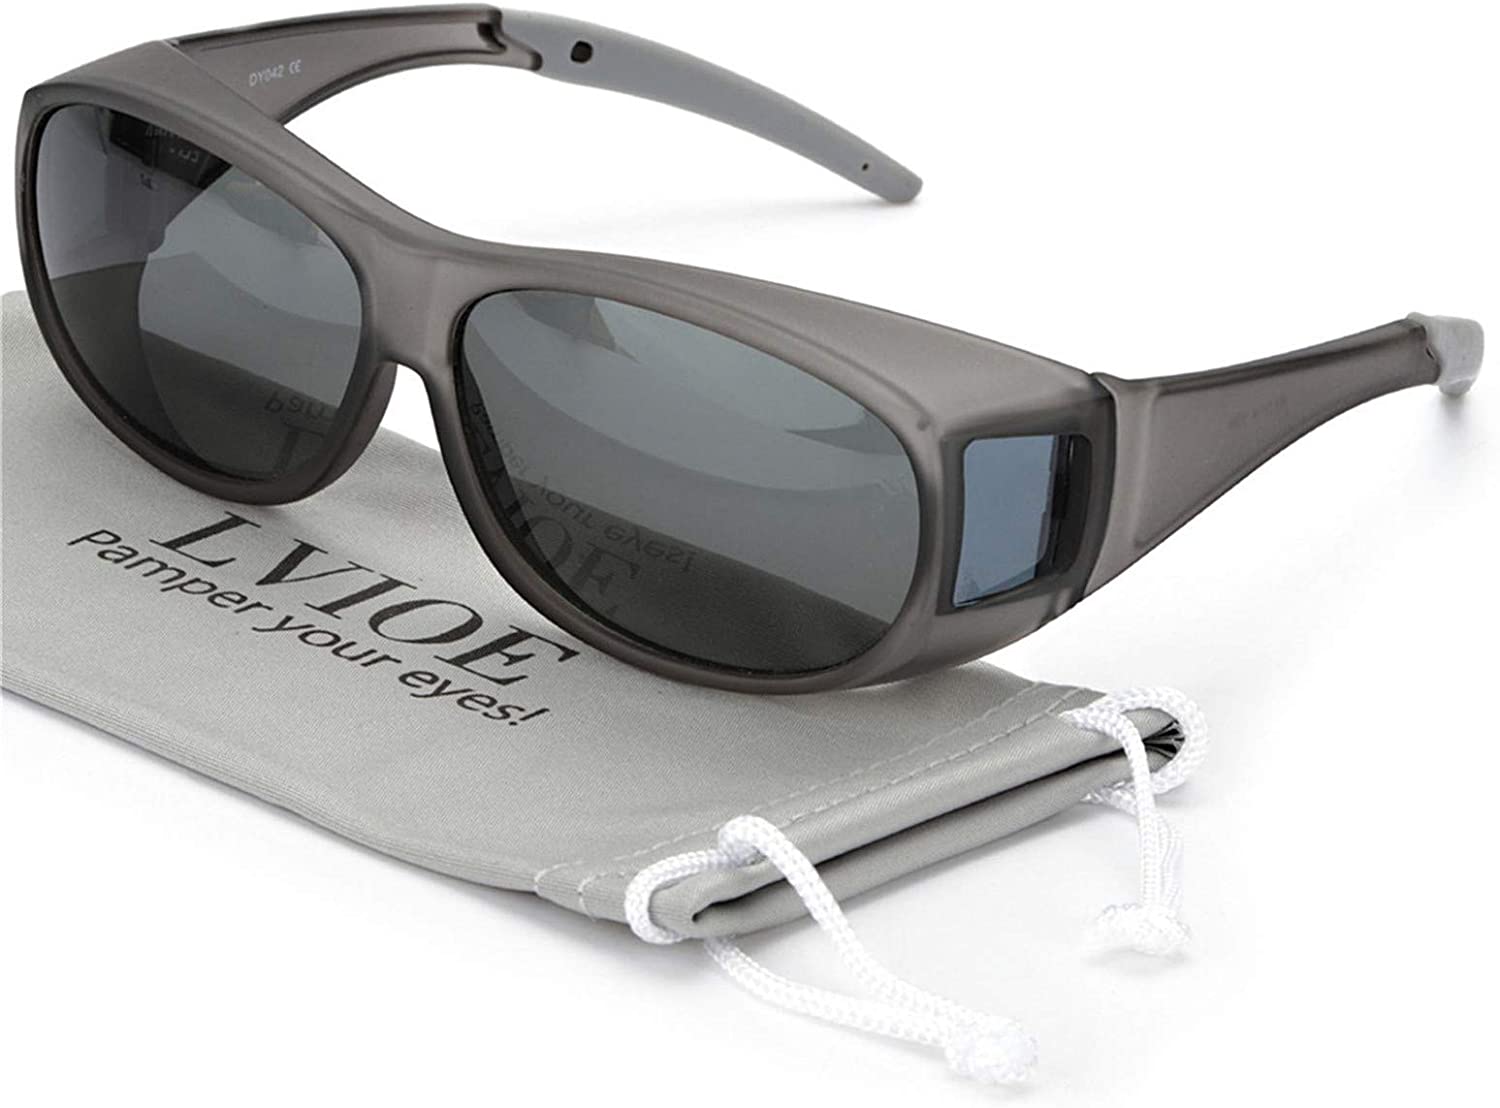 Lvioe Wrap Around Sunglasses For Men Wear Over Prescription Glasses